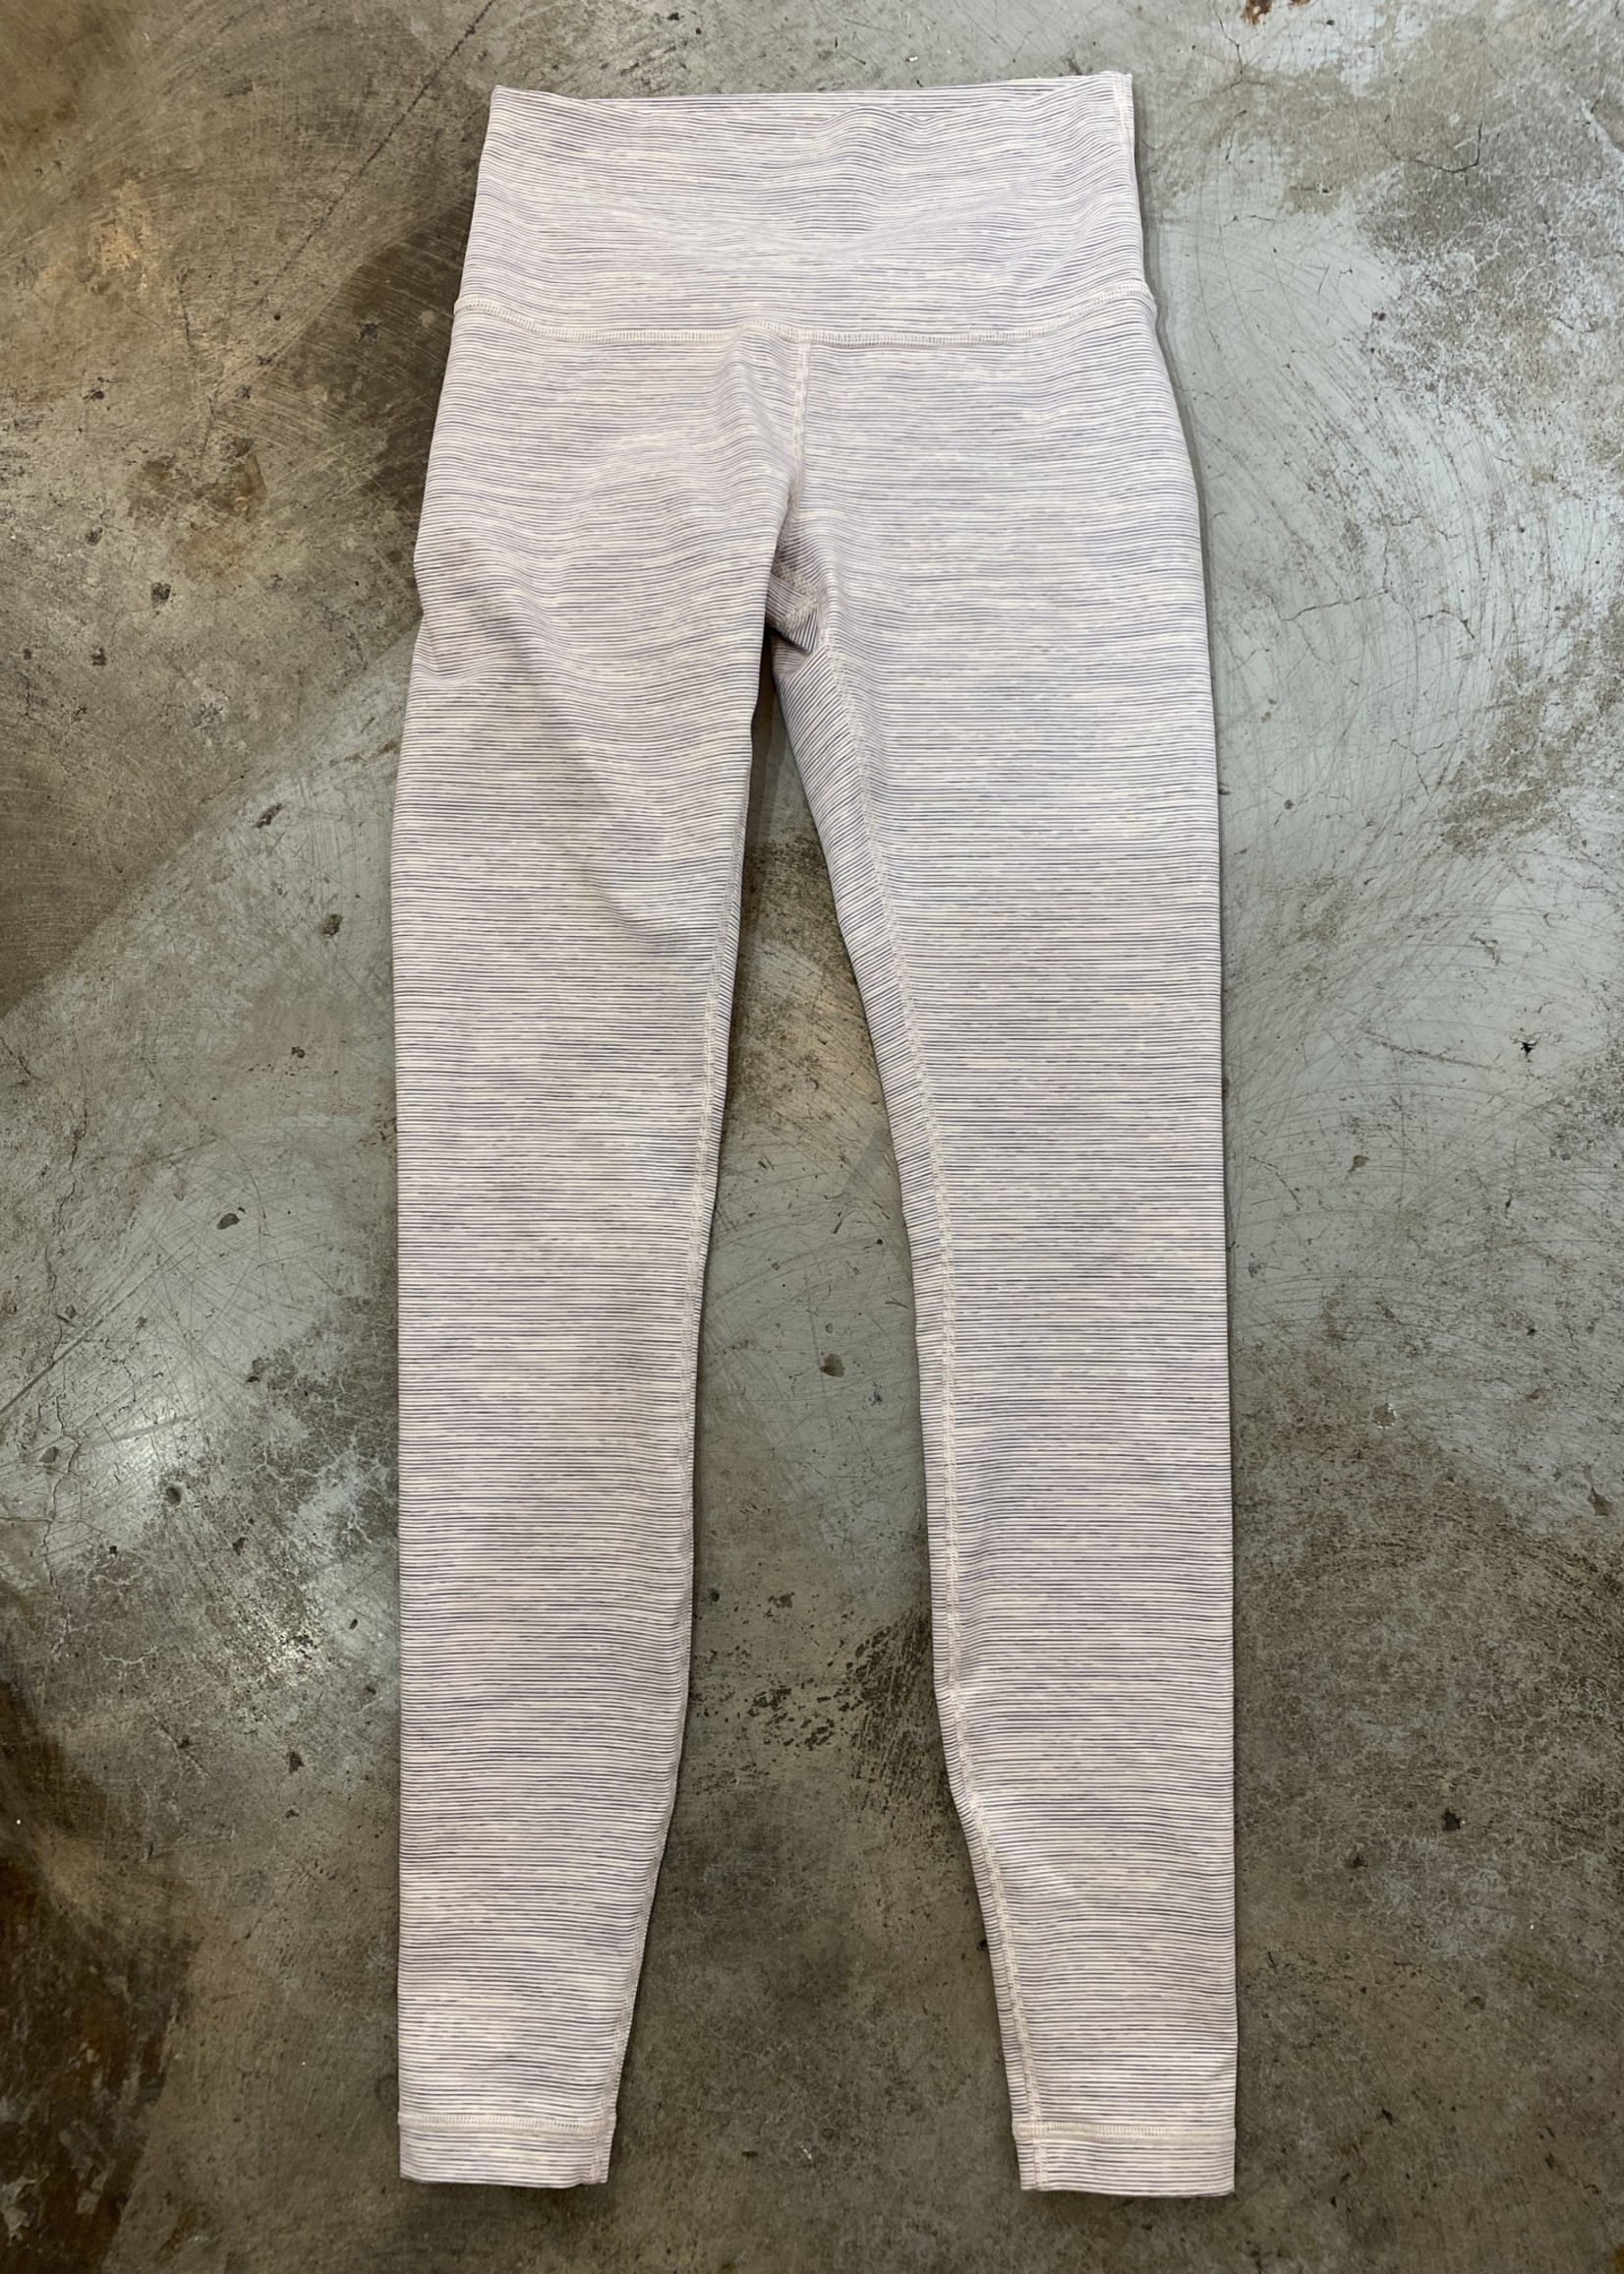 Lululemon Peach/Grey Striped Leggings 6/S